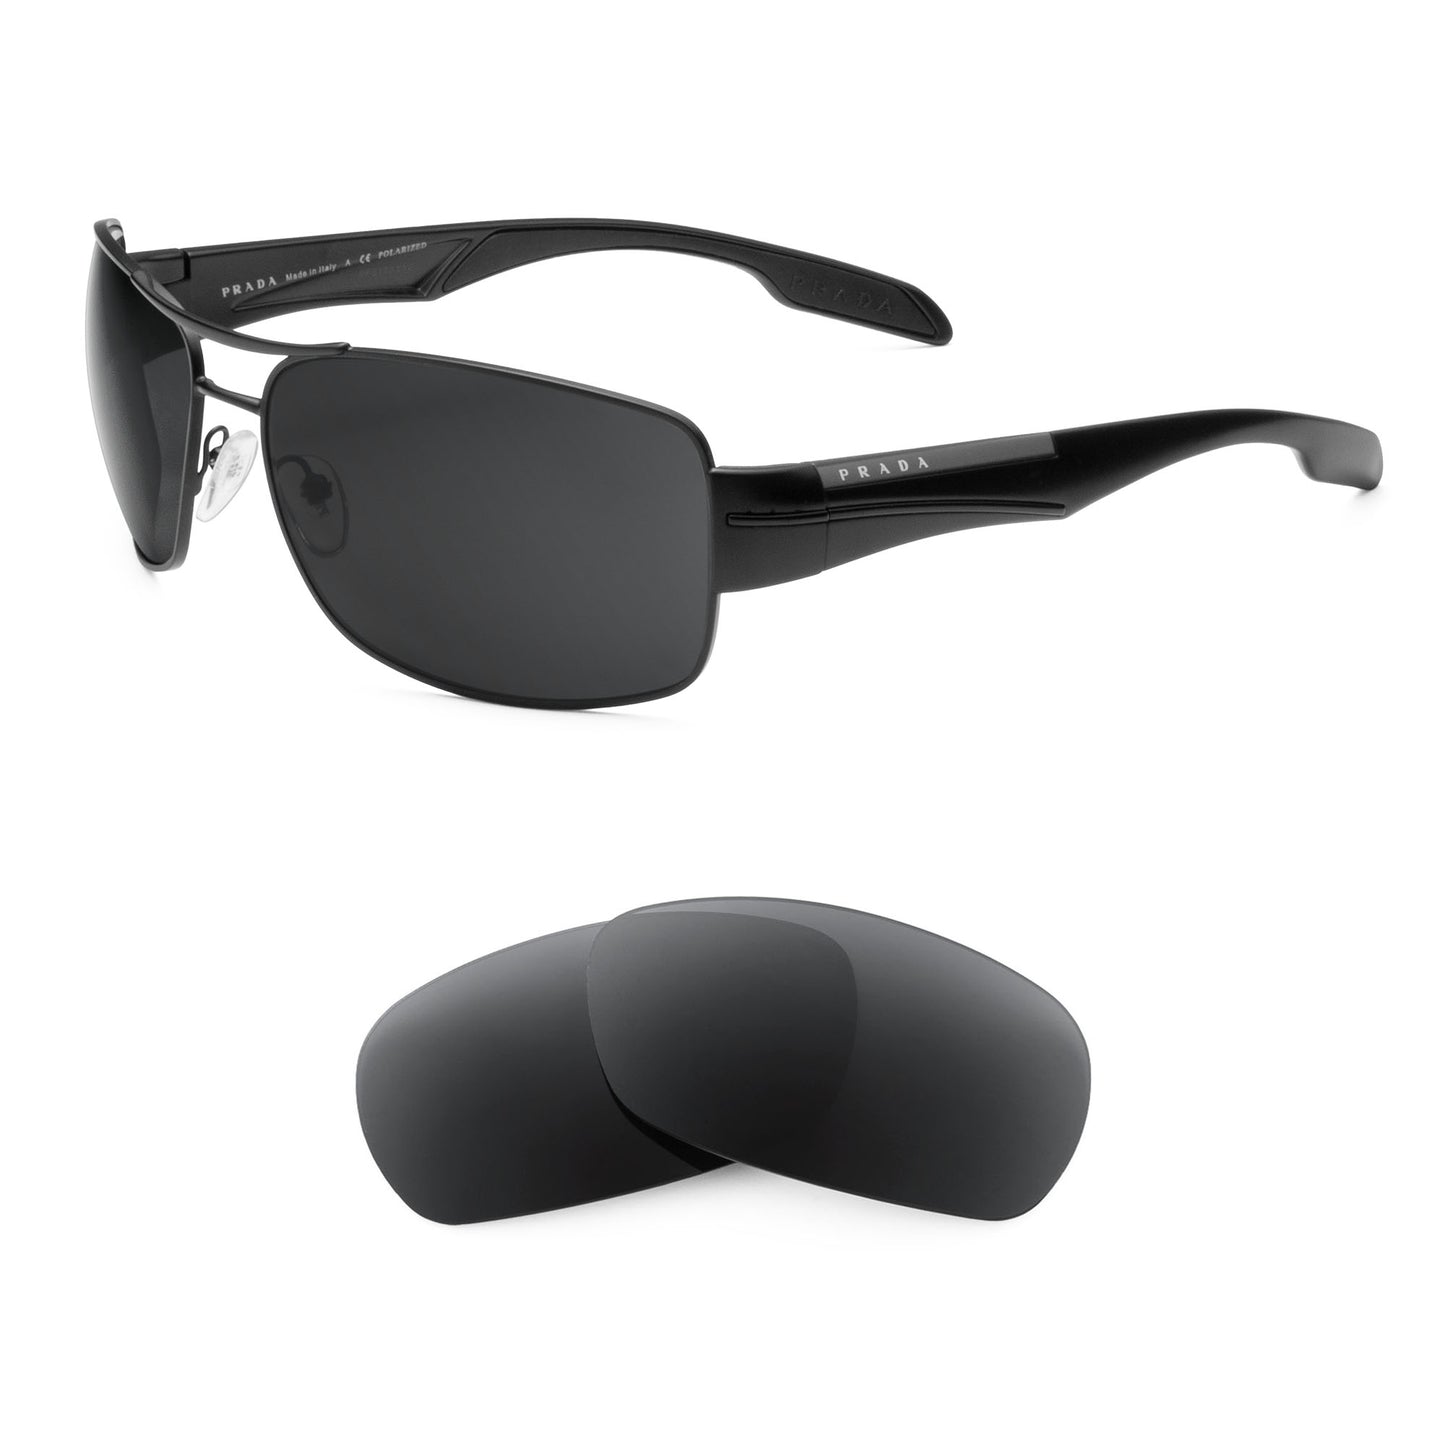 Prada SPS 53N sunglasses with replacement lenses